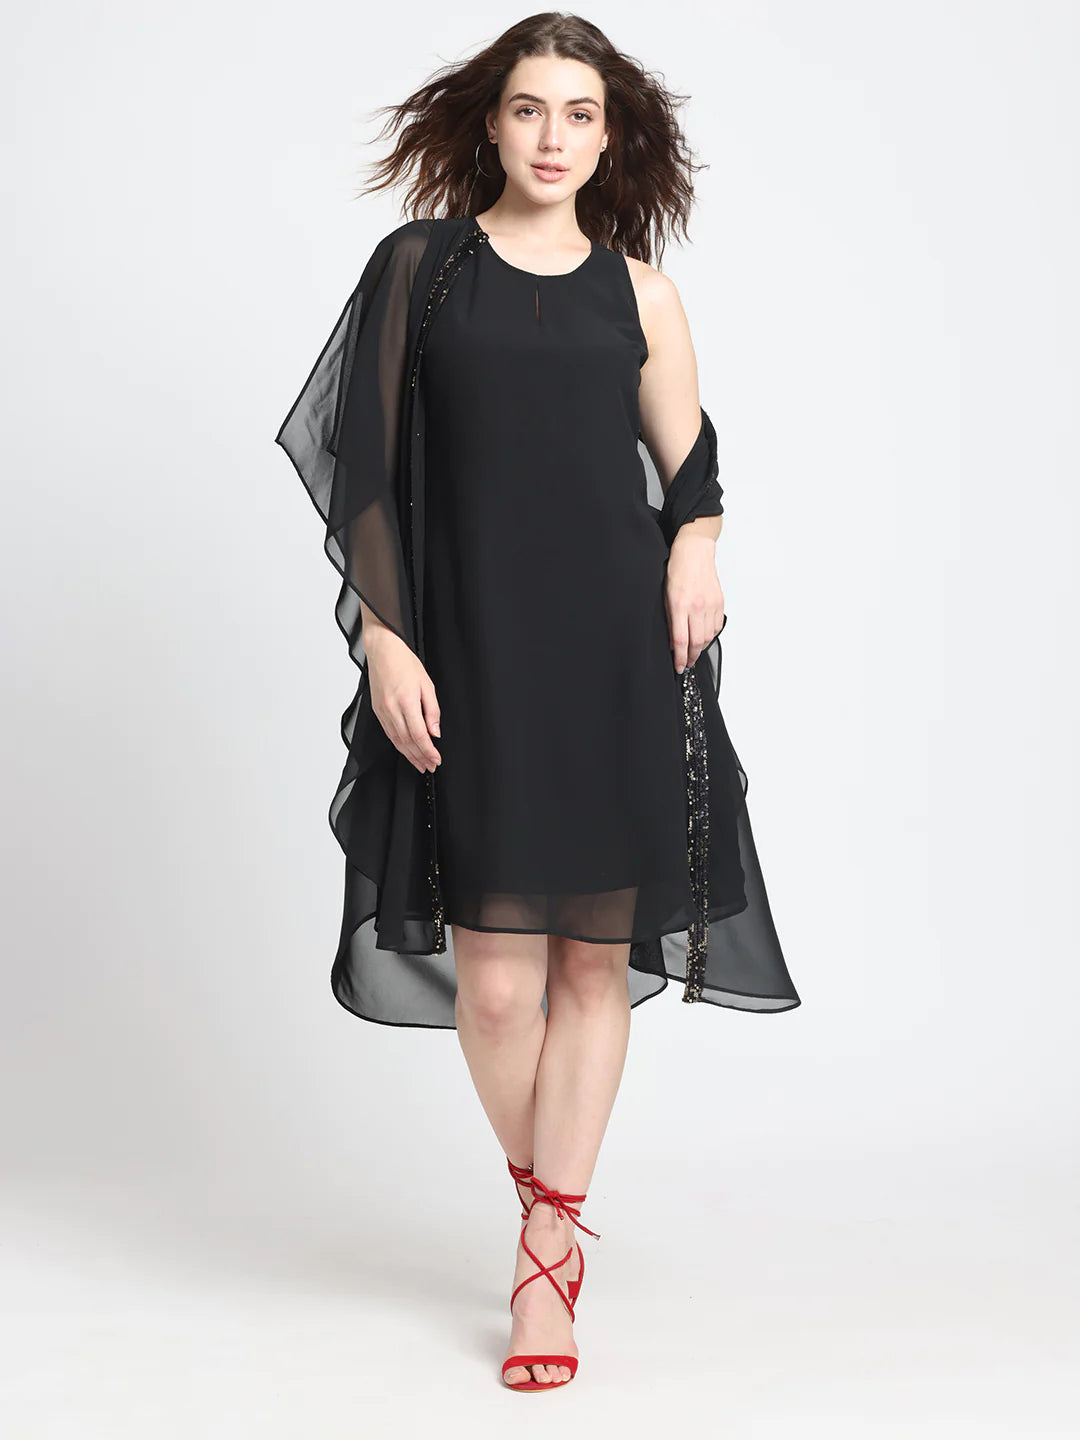 Black Cape Dress for Women | Graceful Black Cape Dress